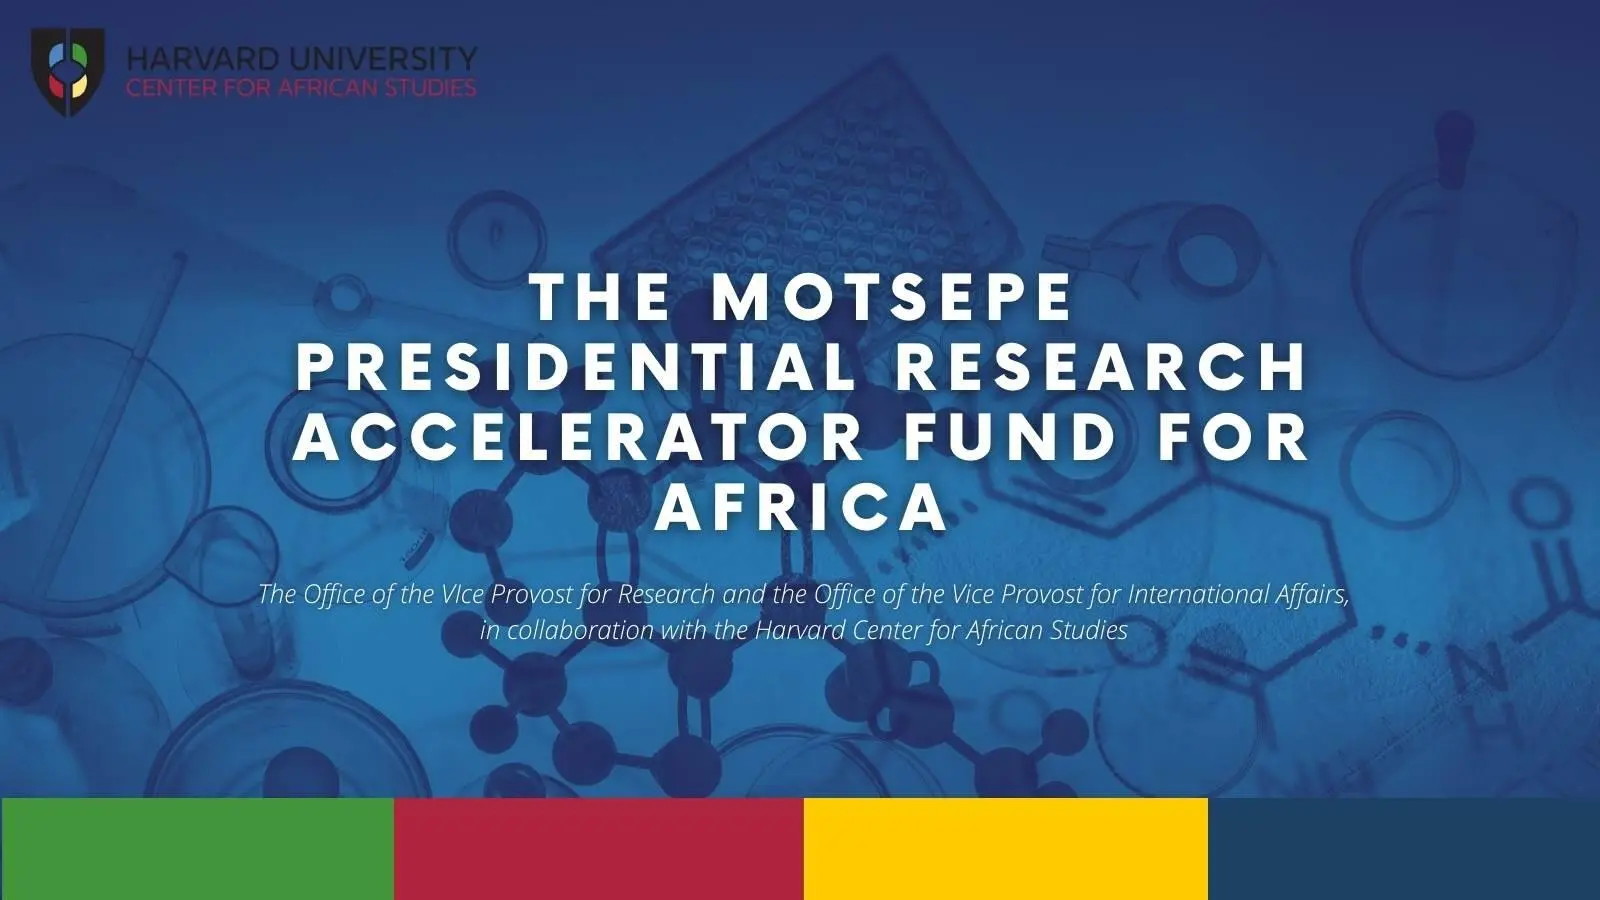 Chosen for Motsepe Presidential Research Fund award